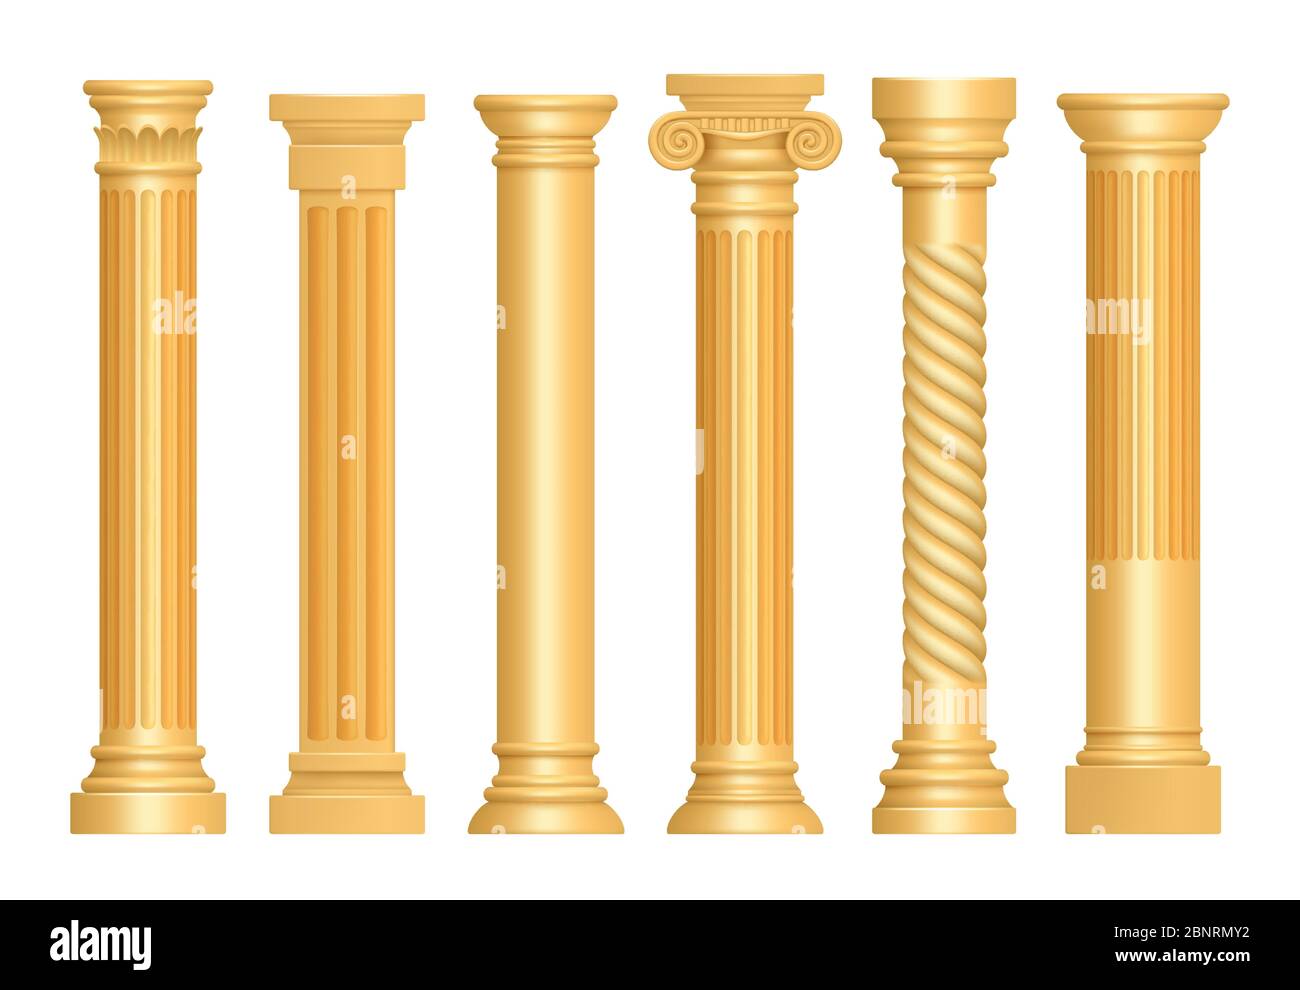 Goldene antike Säule. Klassische römische Säulen architektonische Kunst Skulptur Sockel Vektor realistisch Stock Vektor